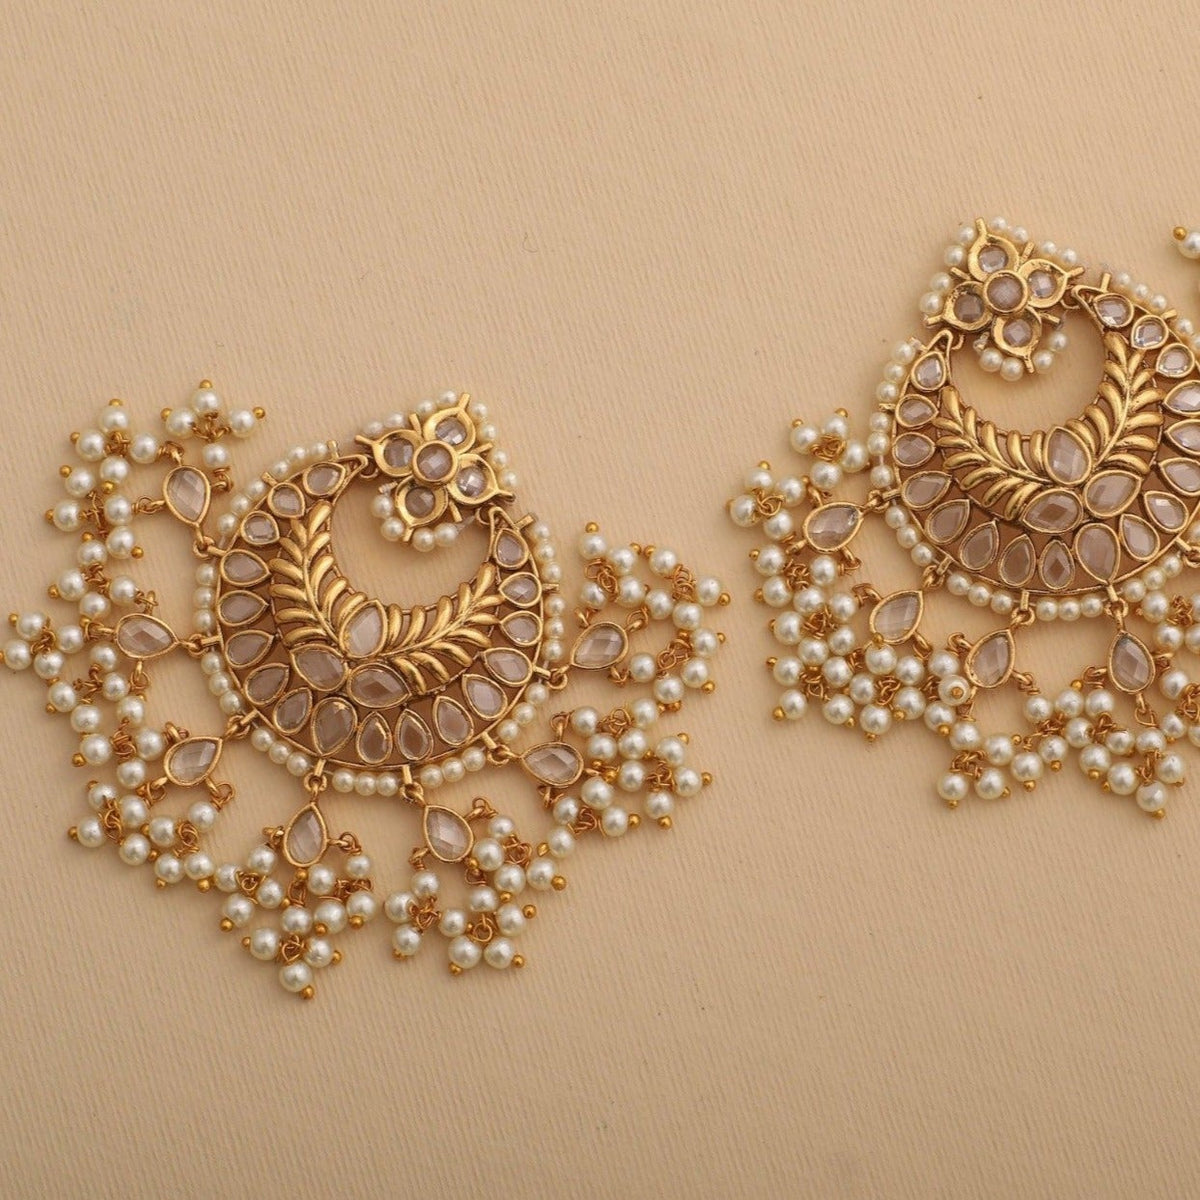 Regal Antique Chandbali Earrings